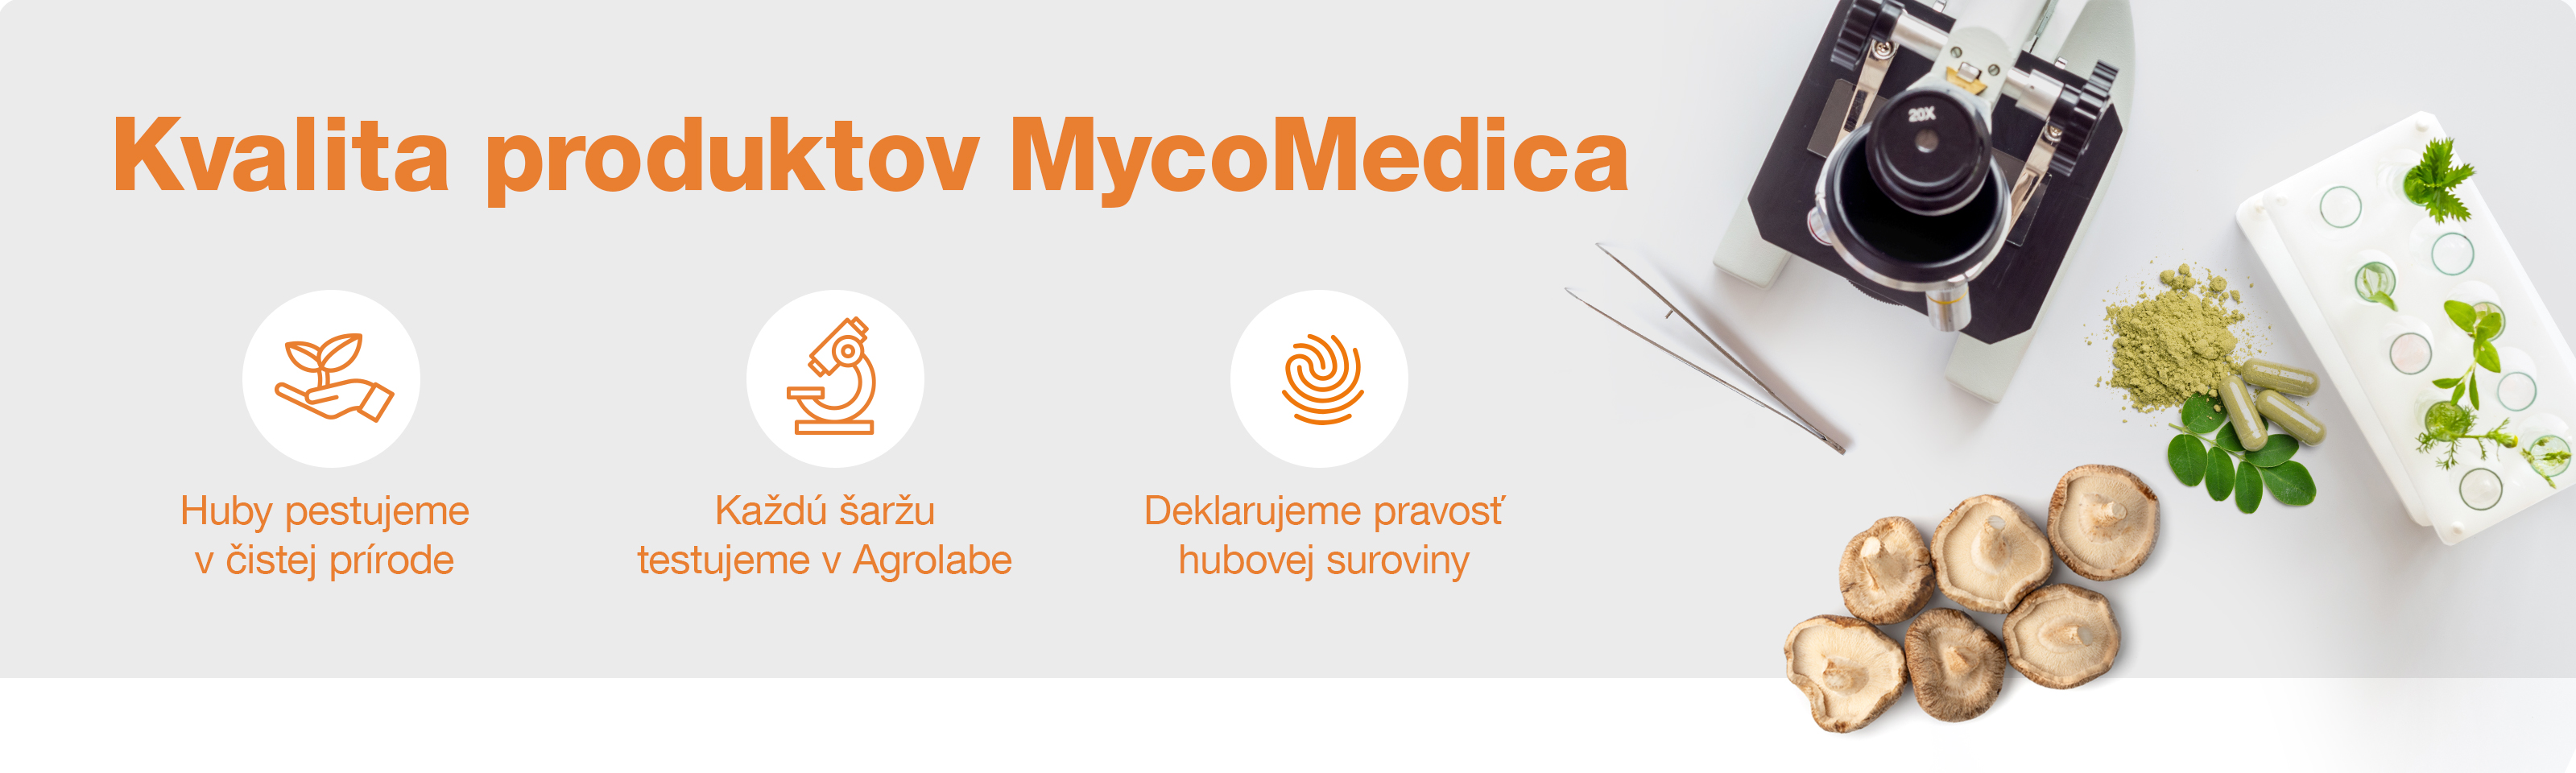 banner Kvalita surovin MycoMedica_SK